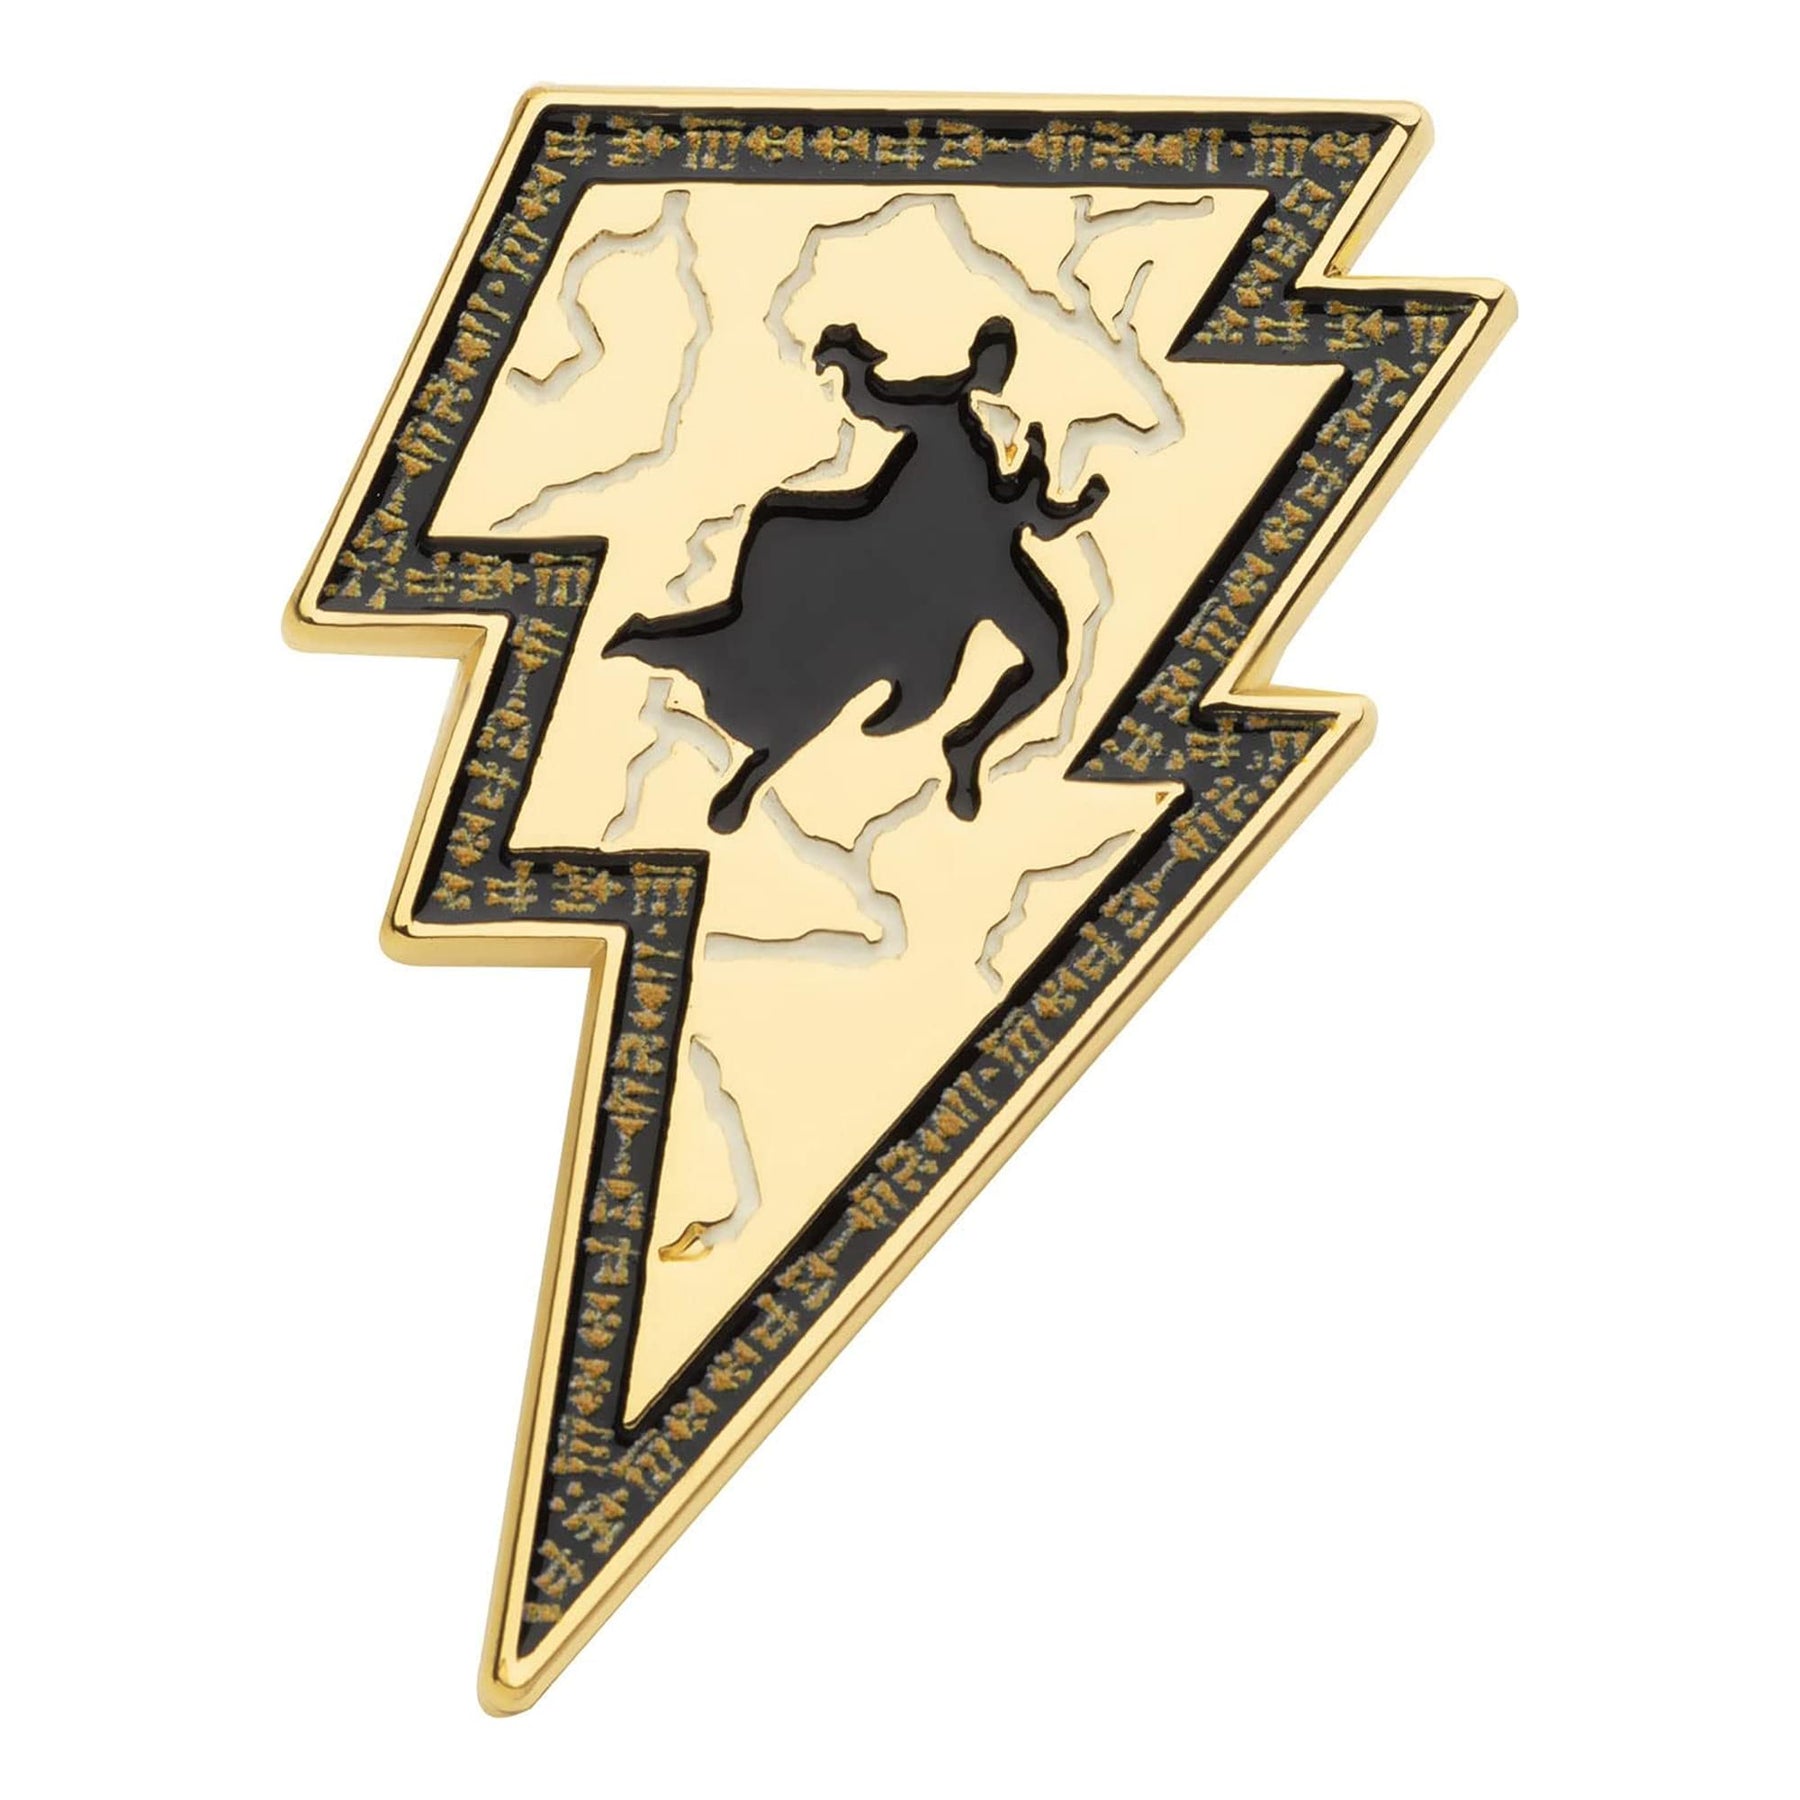 DC Black Adam Lightning Bolt Collector Pin